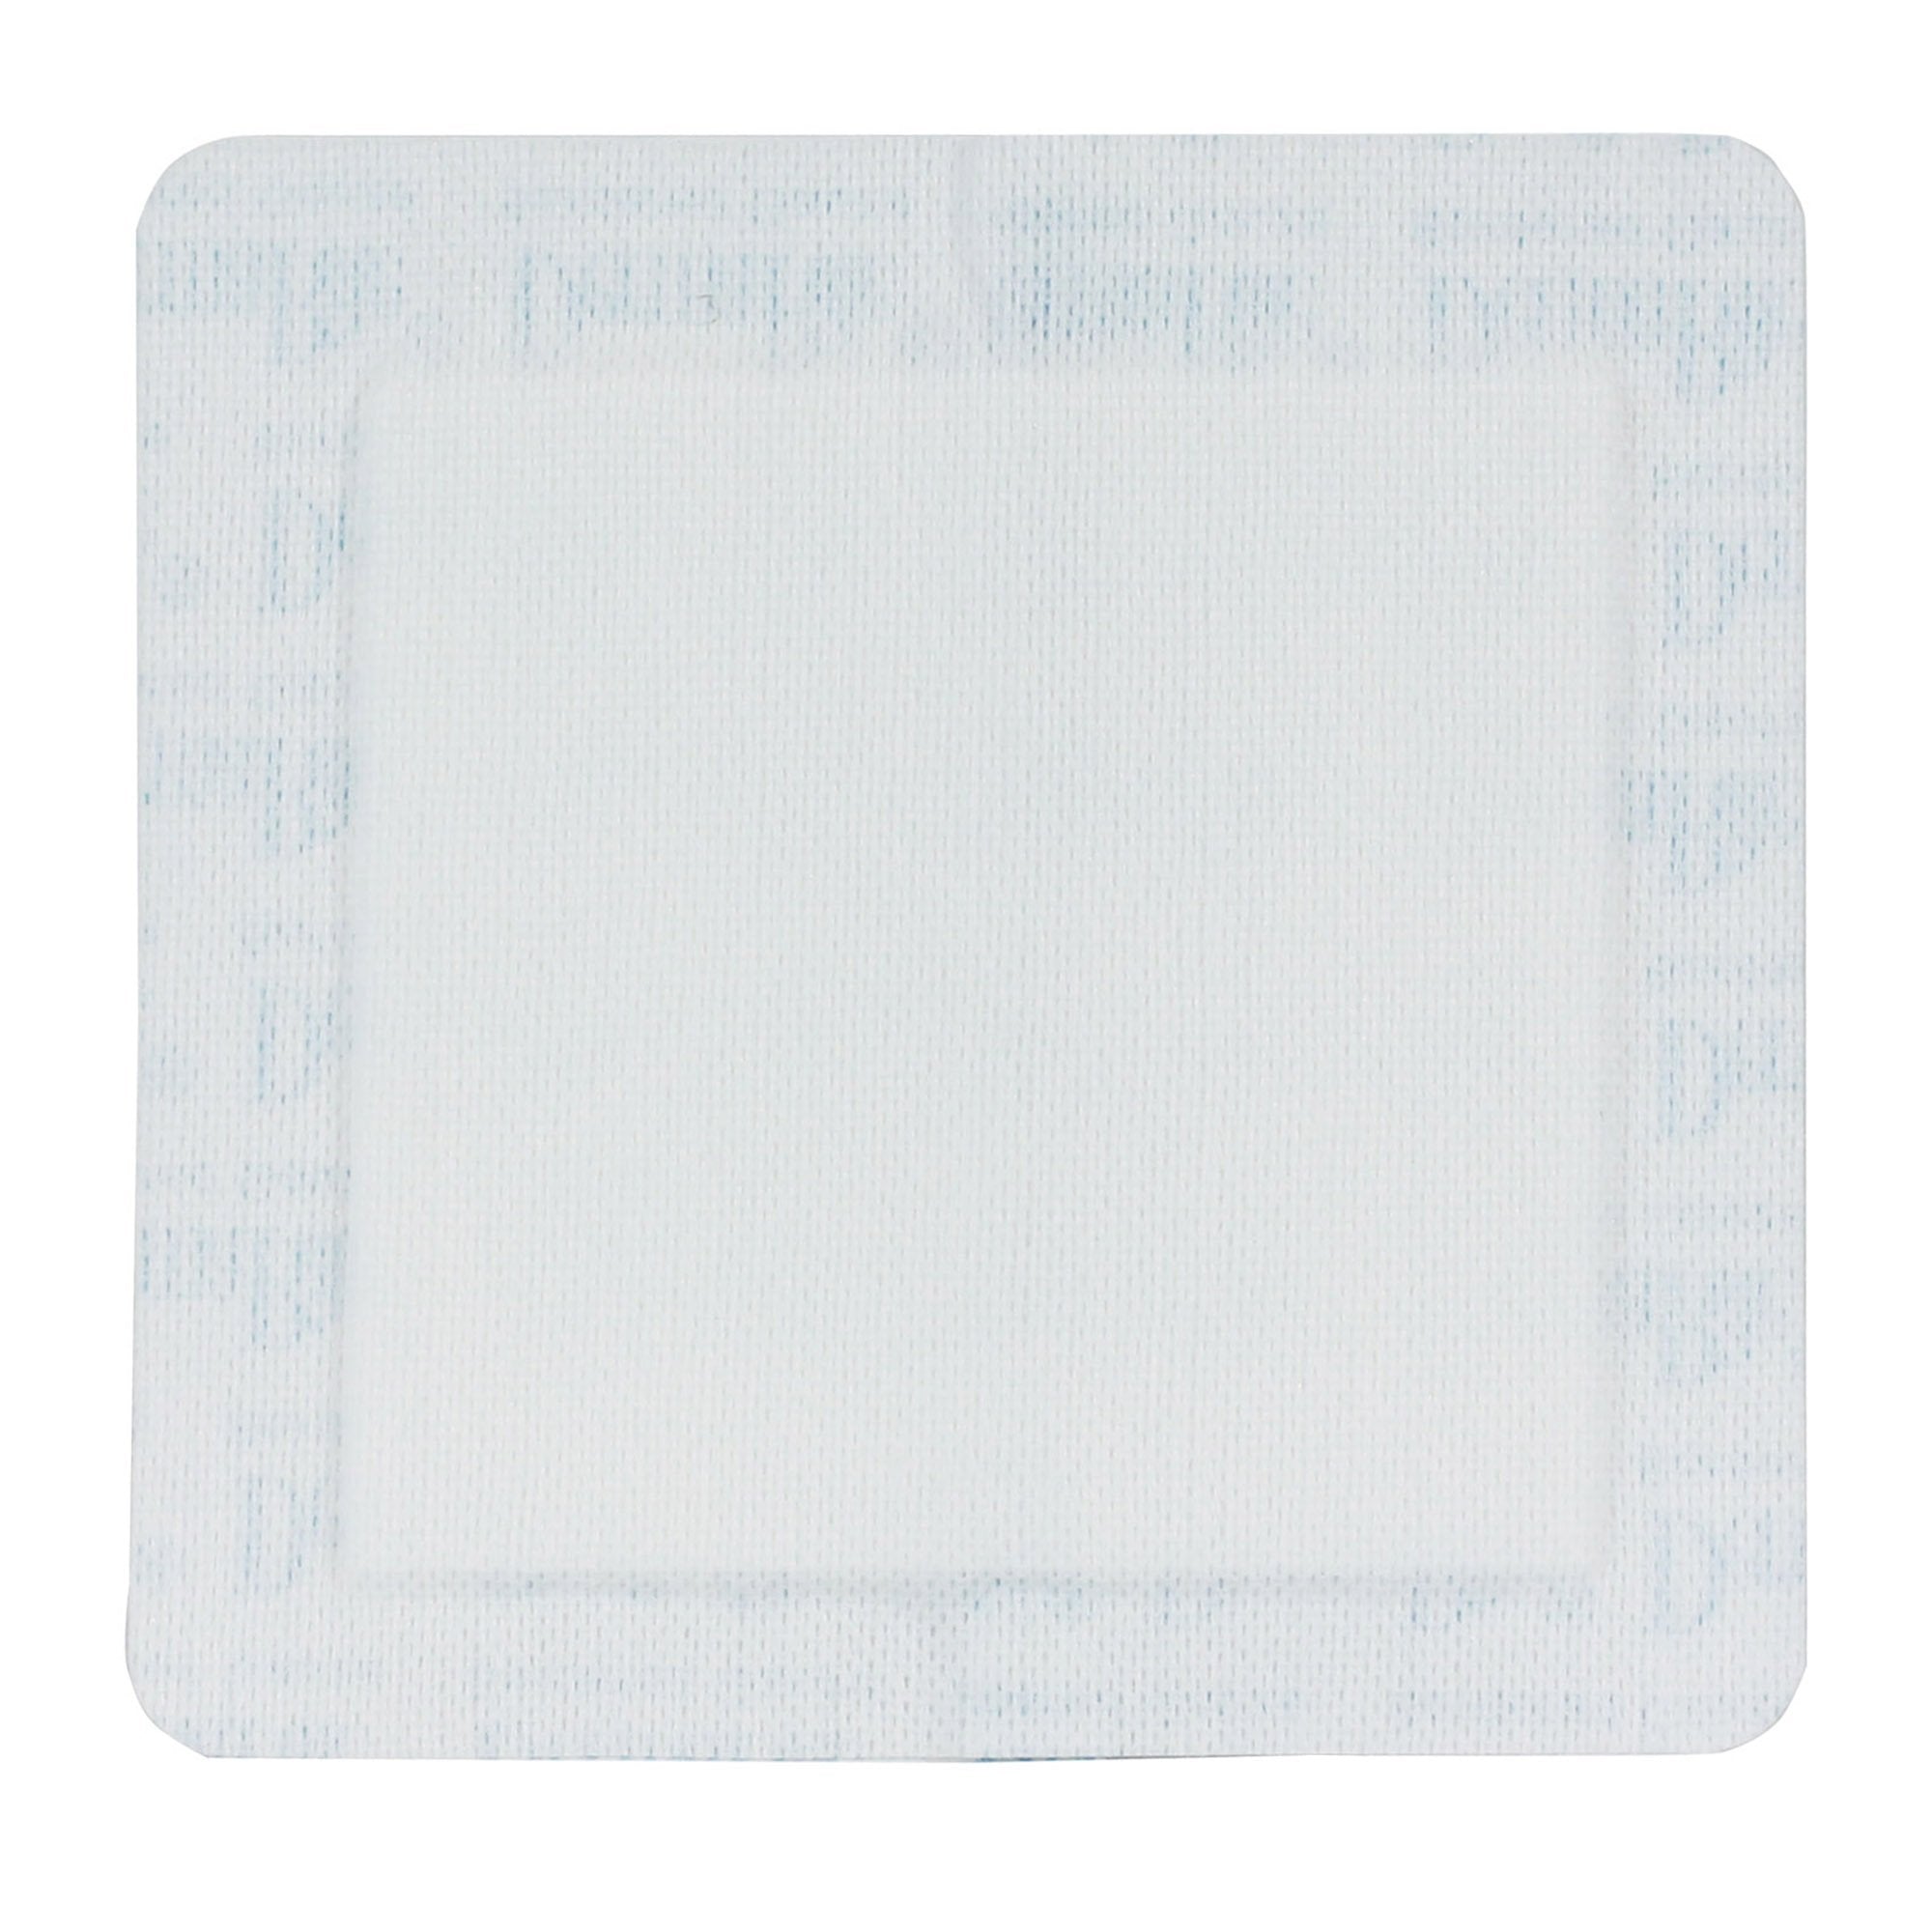 Adhesive Dressing DermaRite® Bordered Gauze 3-3/5 X 4 Inch Square Sterile